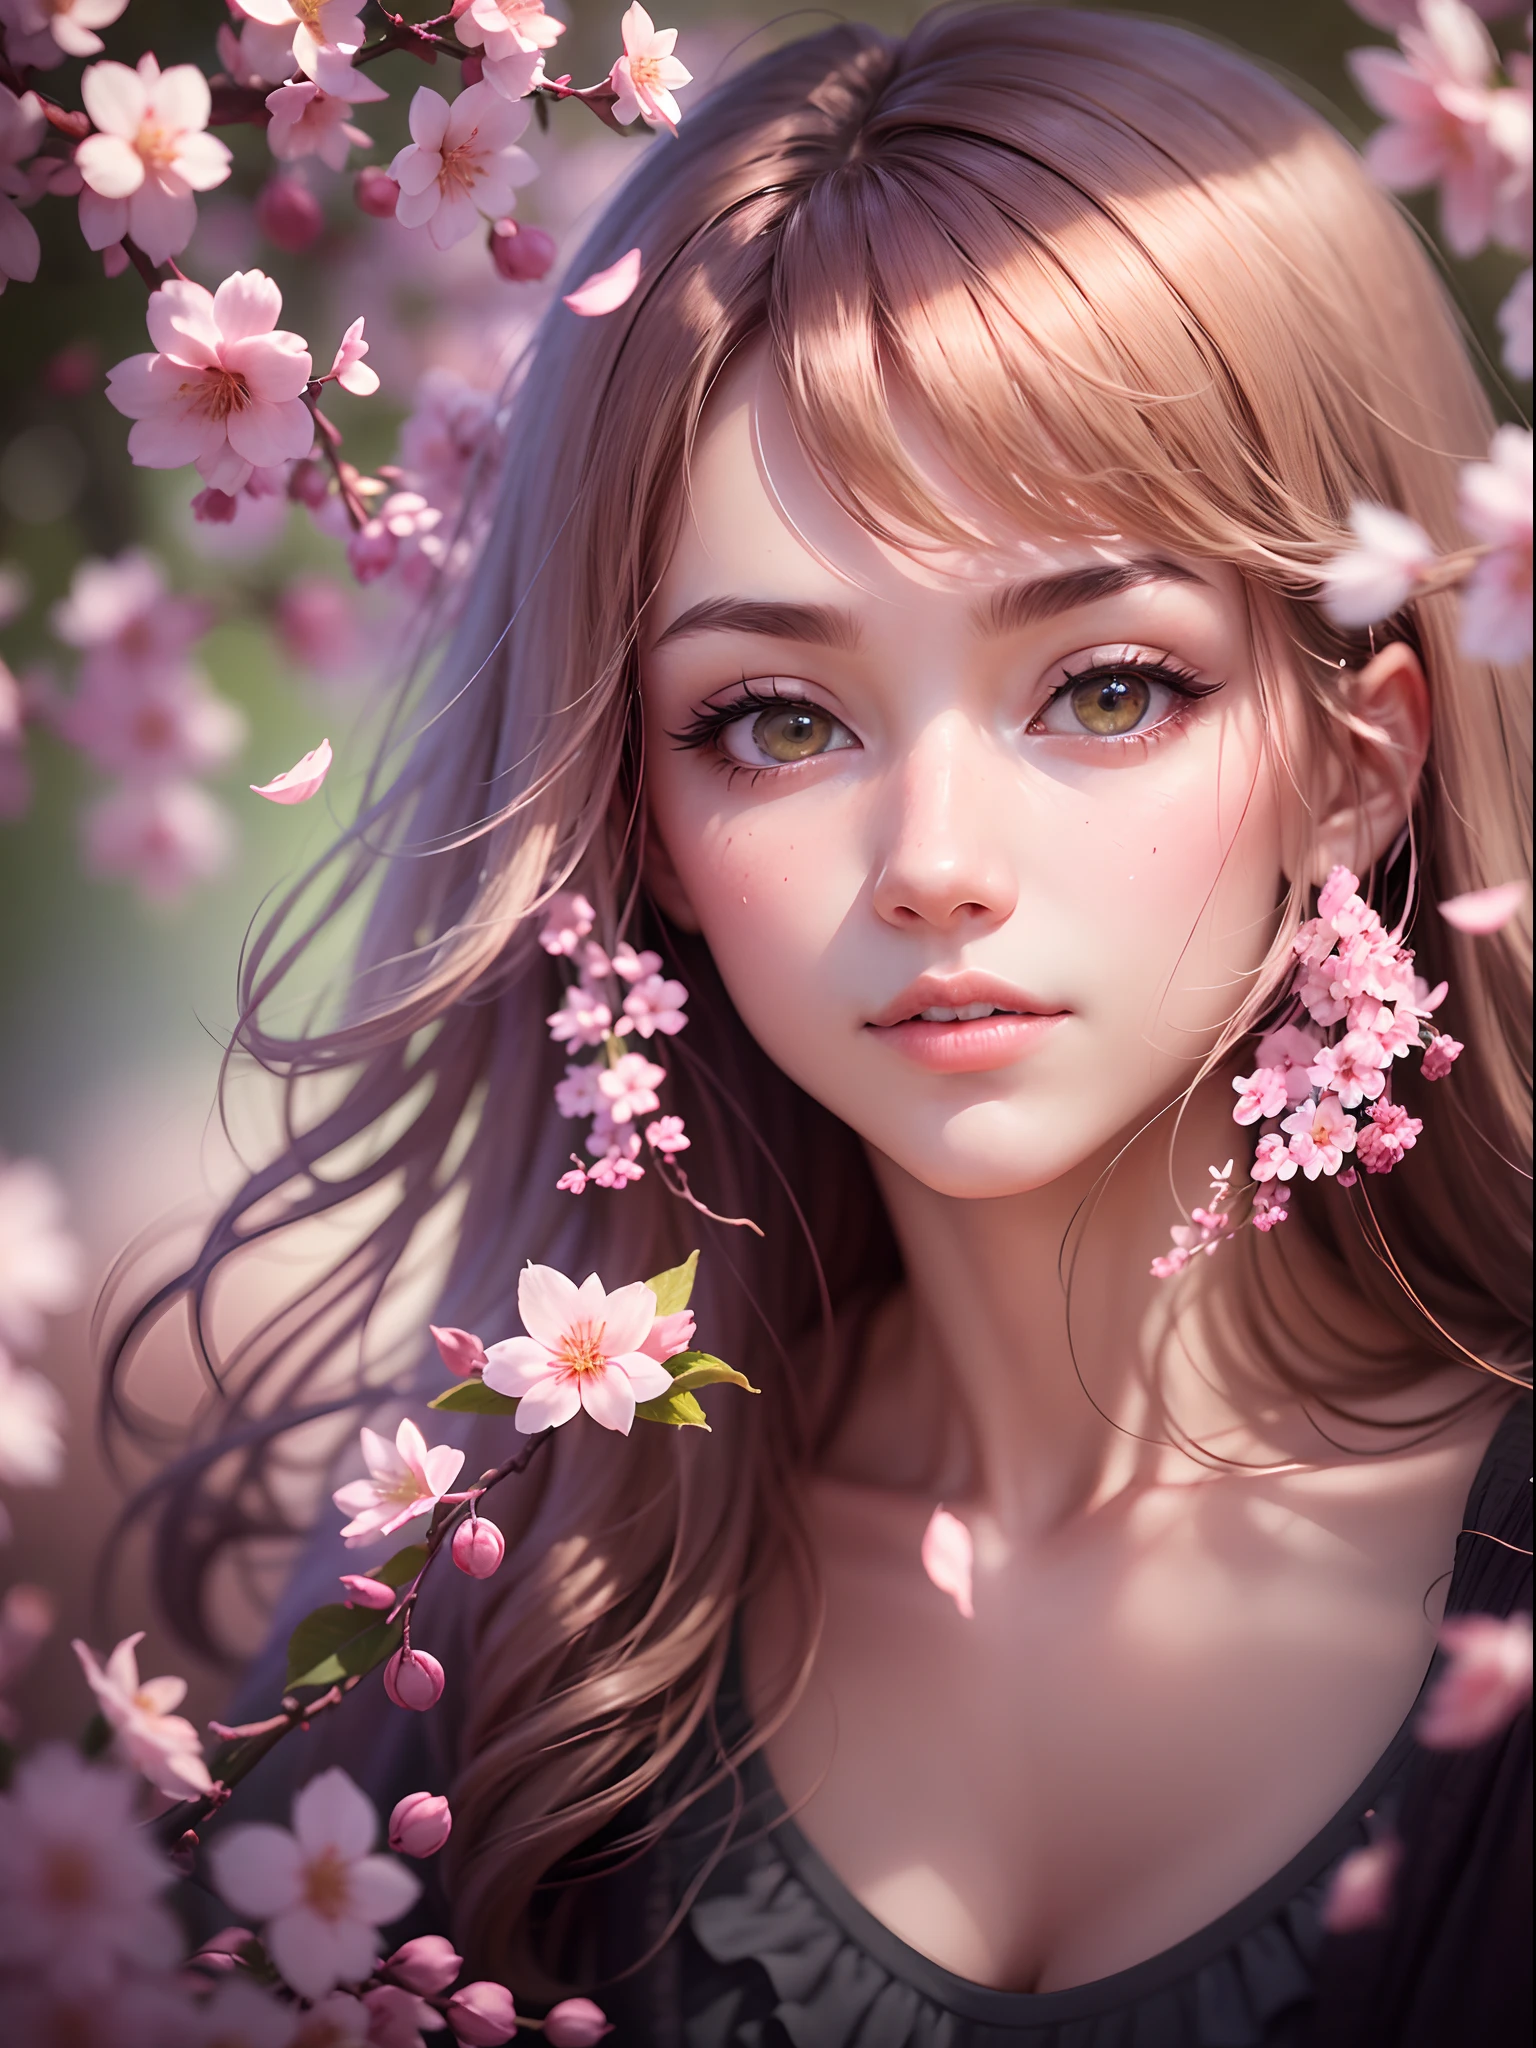 a closeup oF cherry blossoms, 现实主义, 当代艺术, reFlective light, 光线追踪, 色差滥用, 佳能, F/1.8, 散景, 过度接触, 超级细节, 高质量, 8千